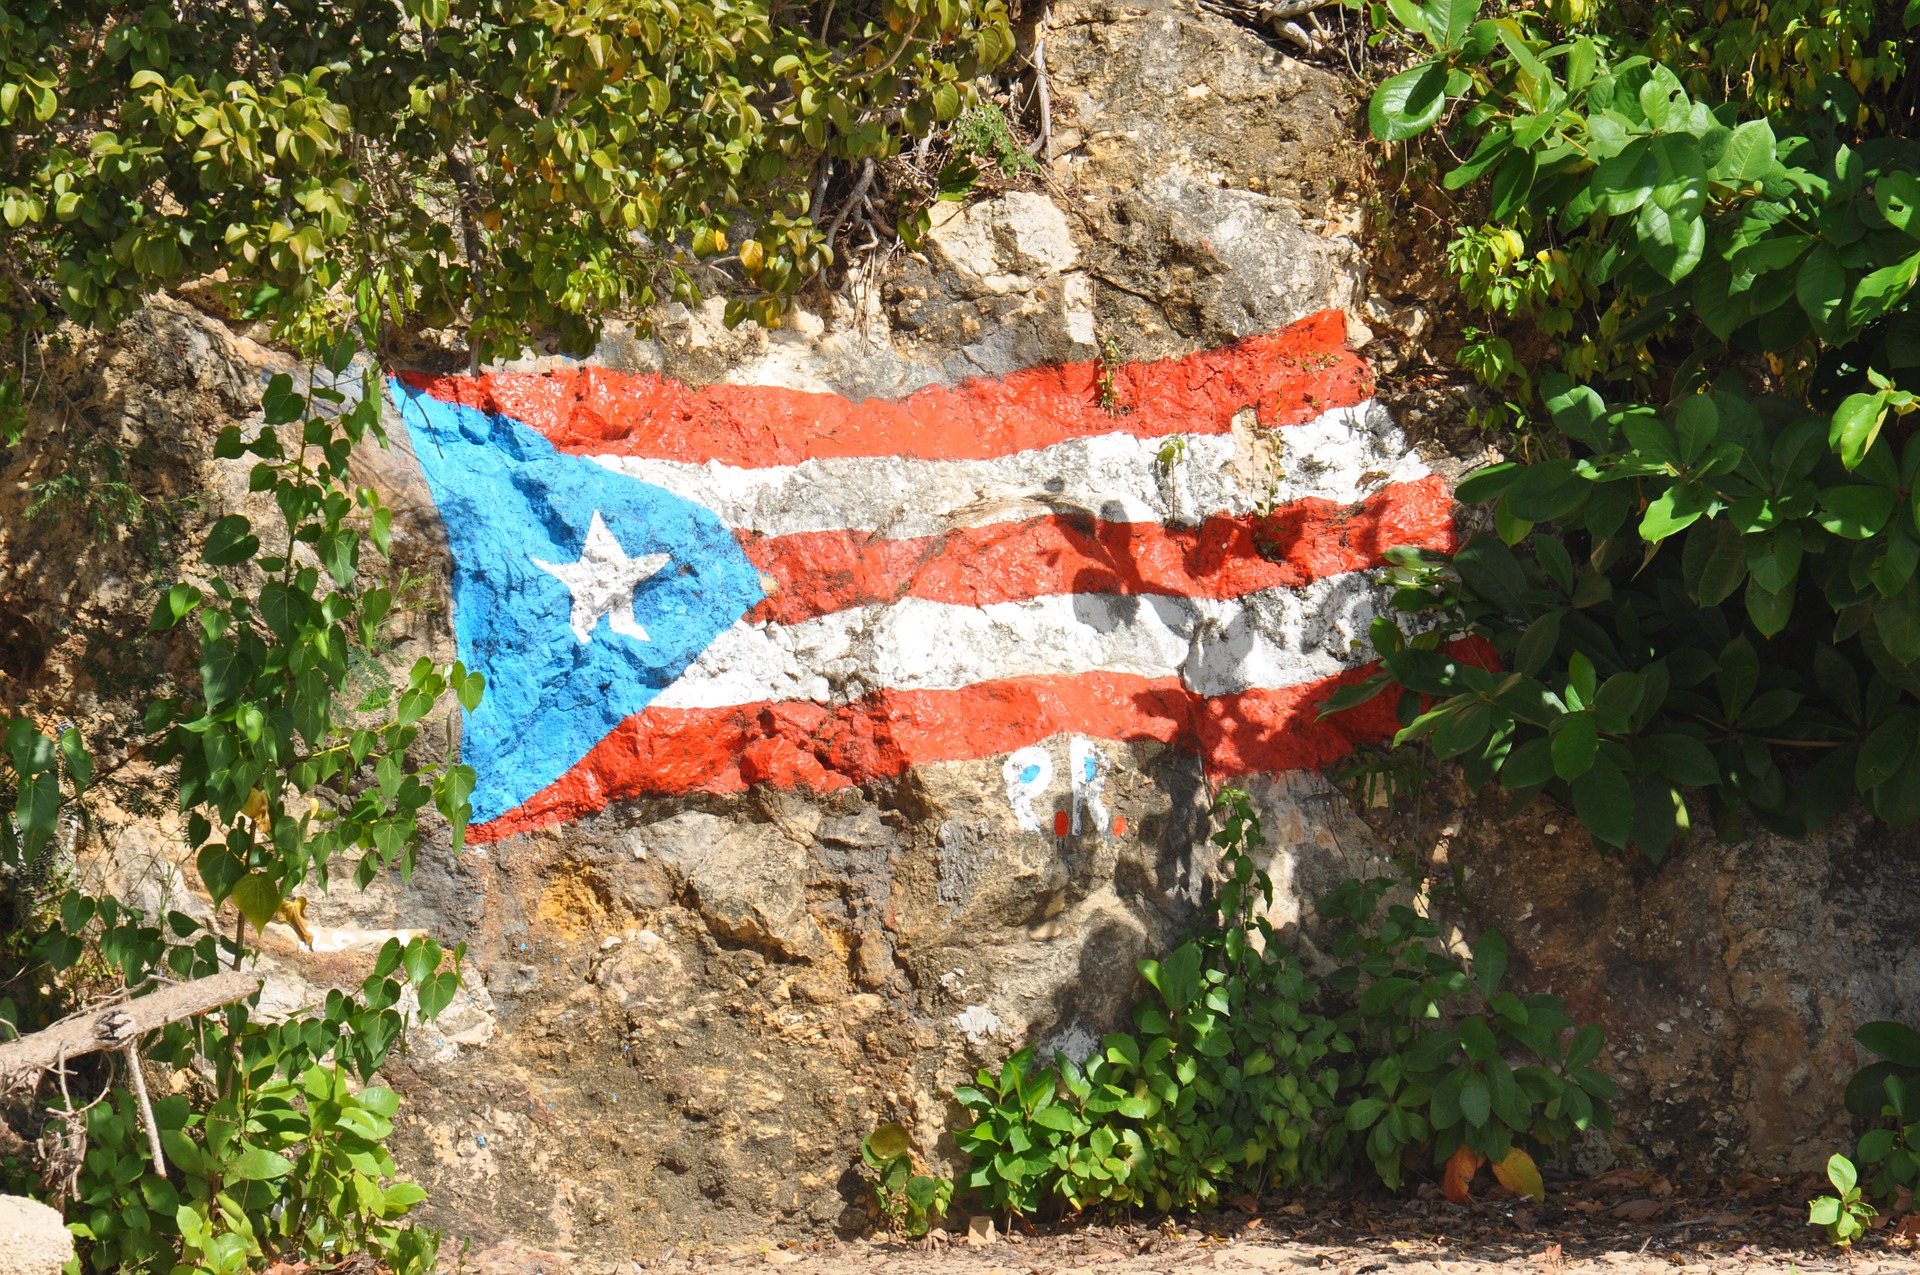 Puerto Rican Slang